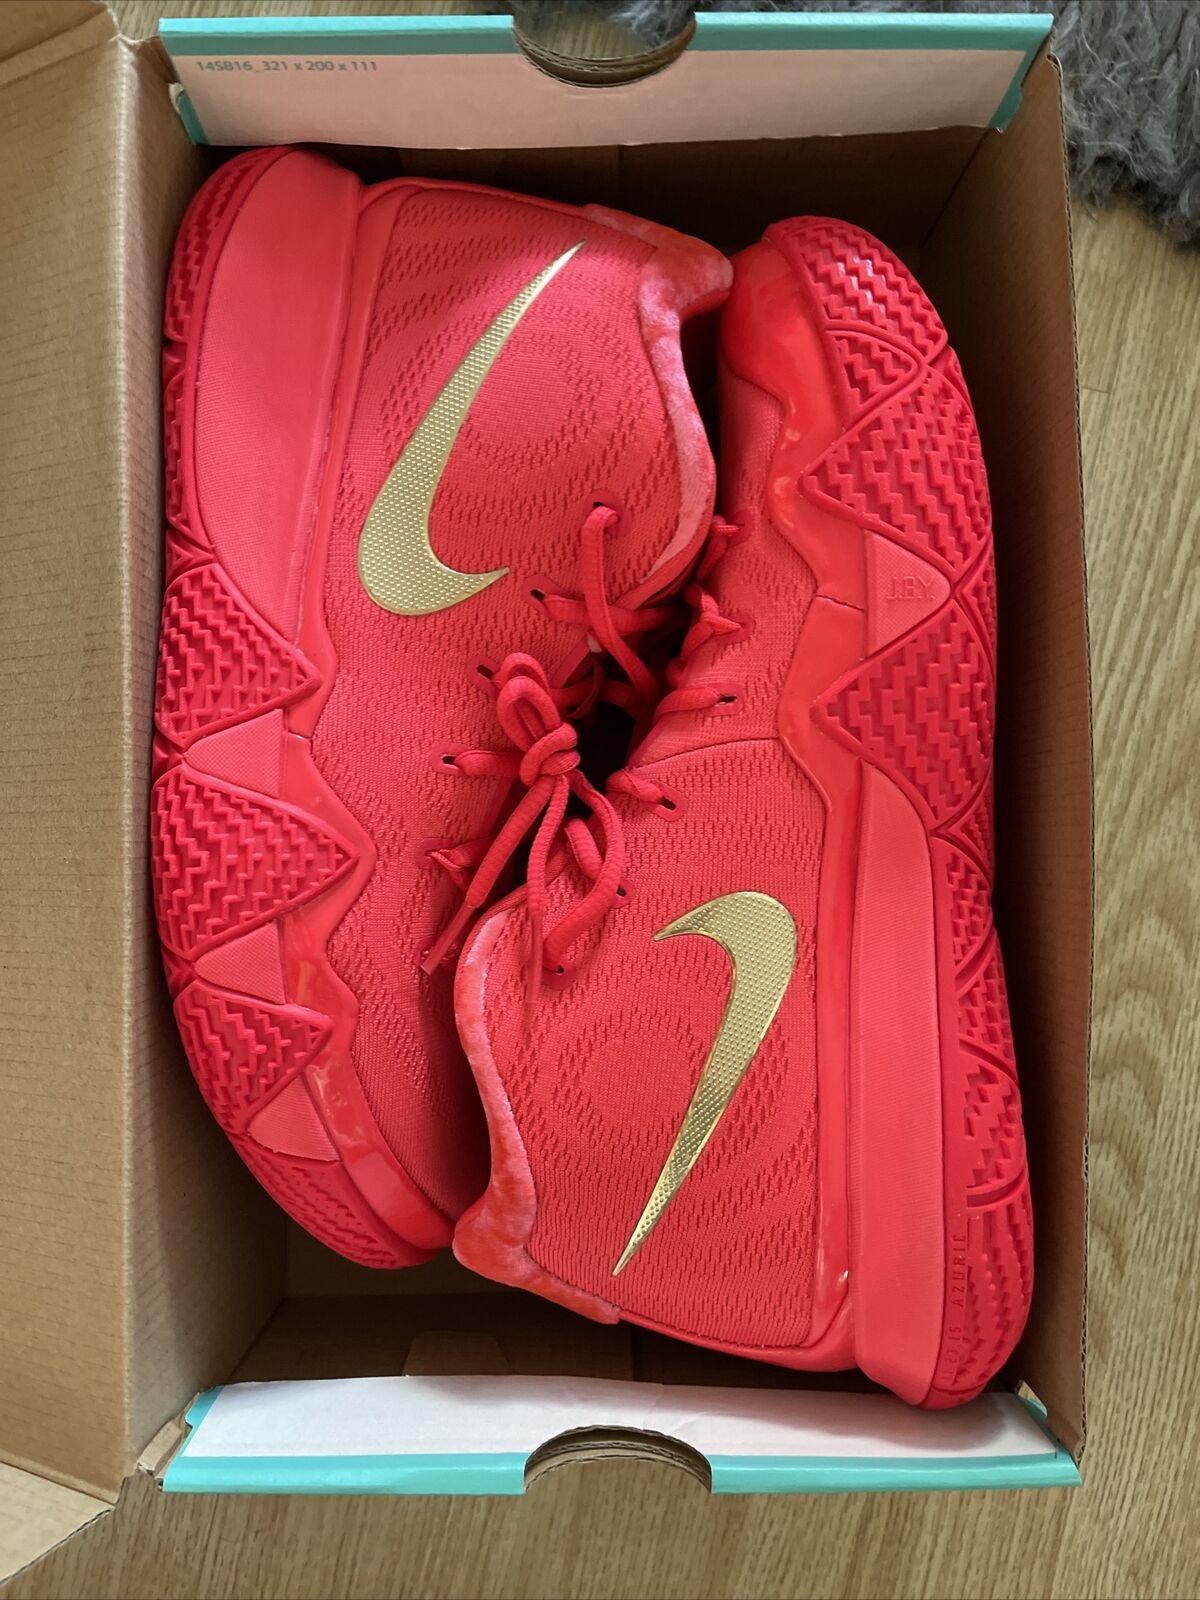 Clancy ventajoso Haiku Nike Kyrie 4 Red Carpet Gold 943806-602 All Star Basketball Shoes Size 9.5  New X | eBay